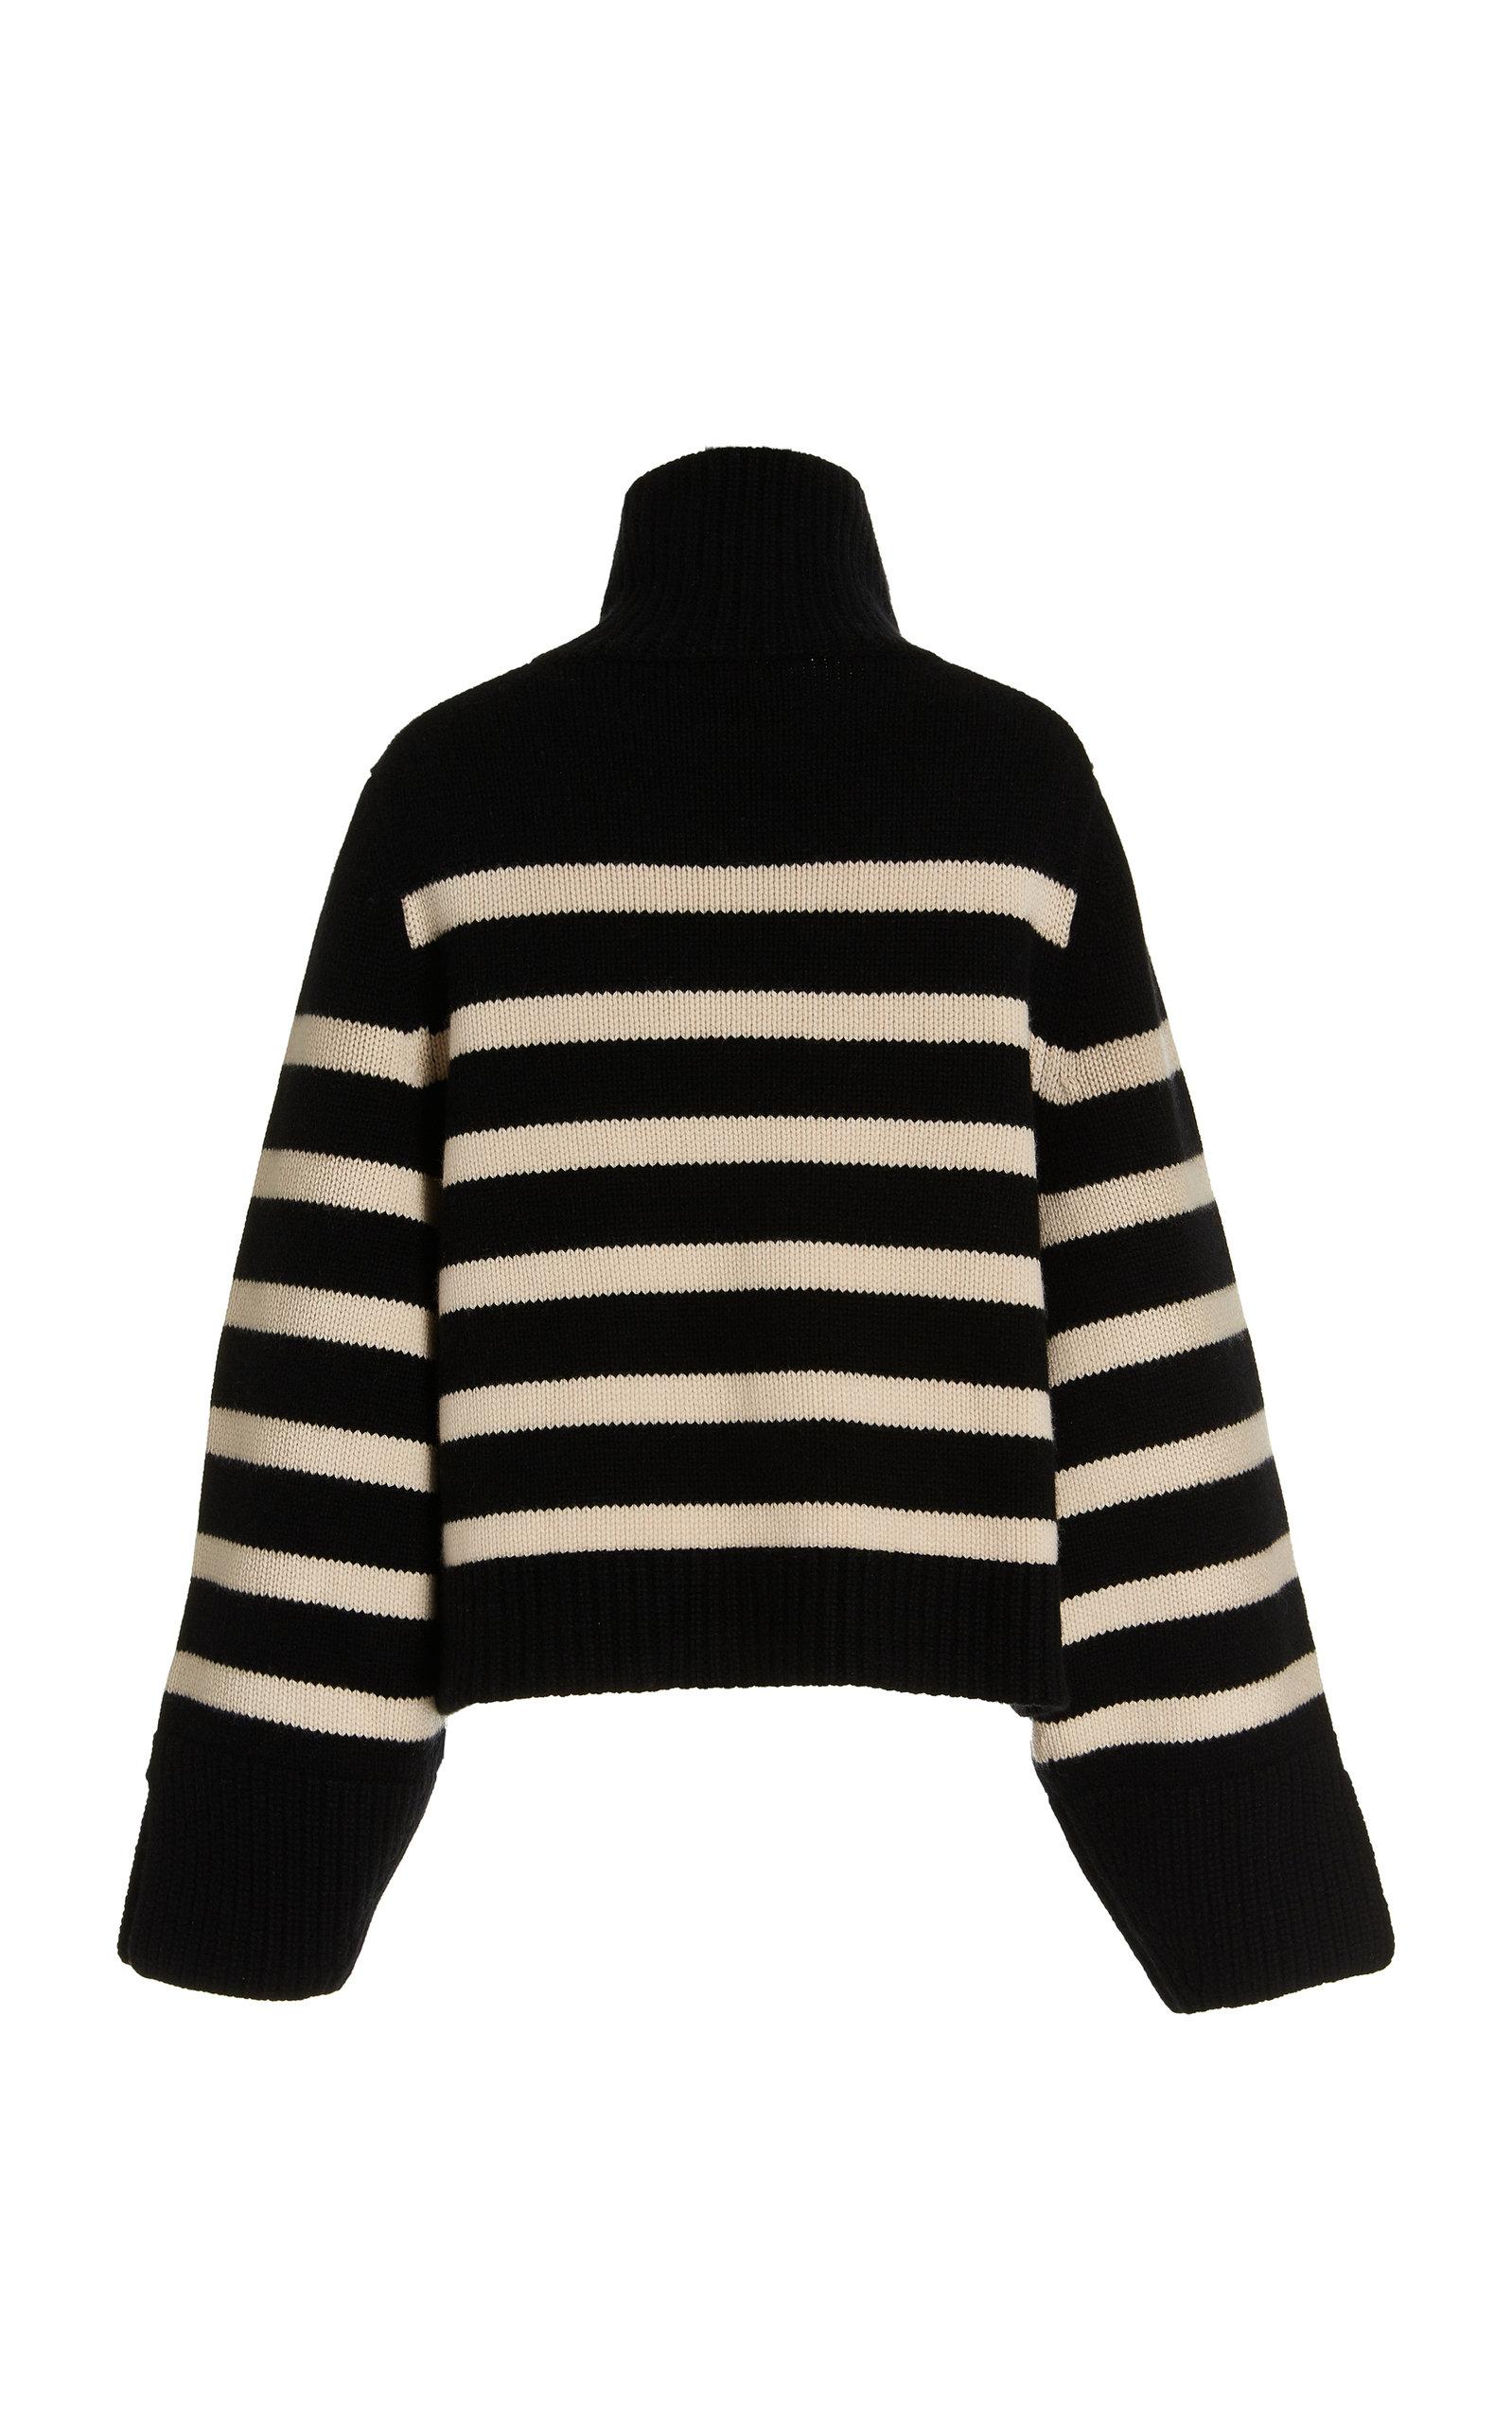 Khaite Marion Striped Cashmere Turtleneck Sweater in Black | Lyst